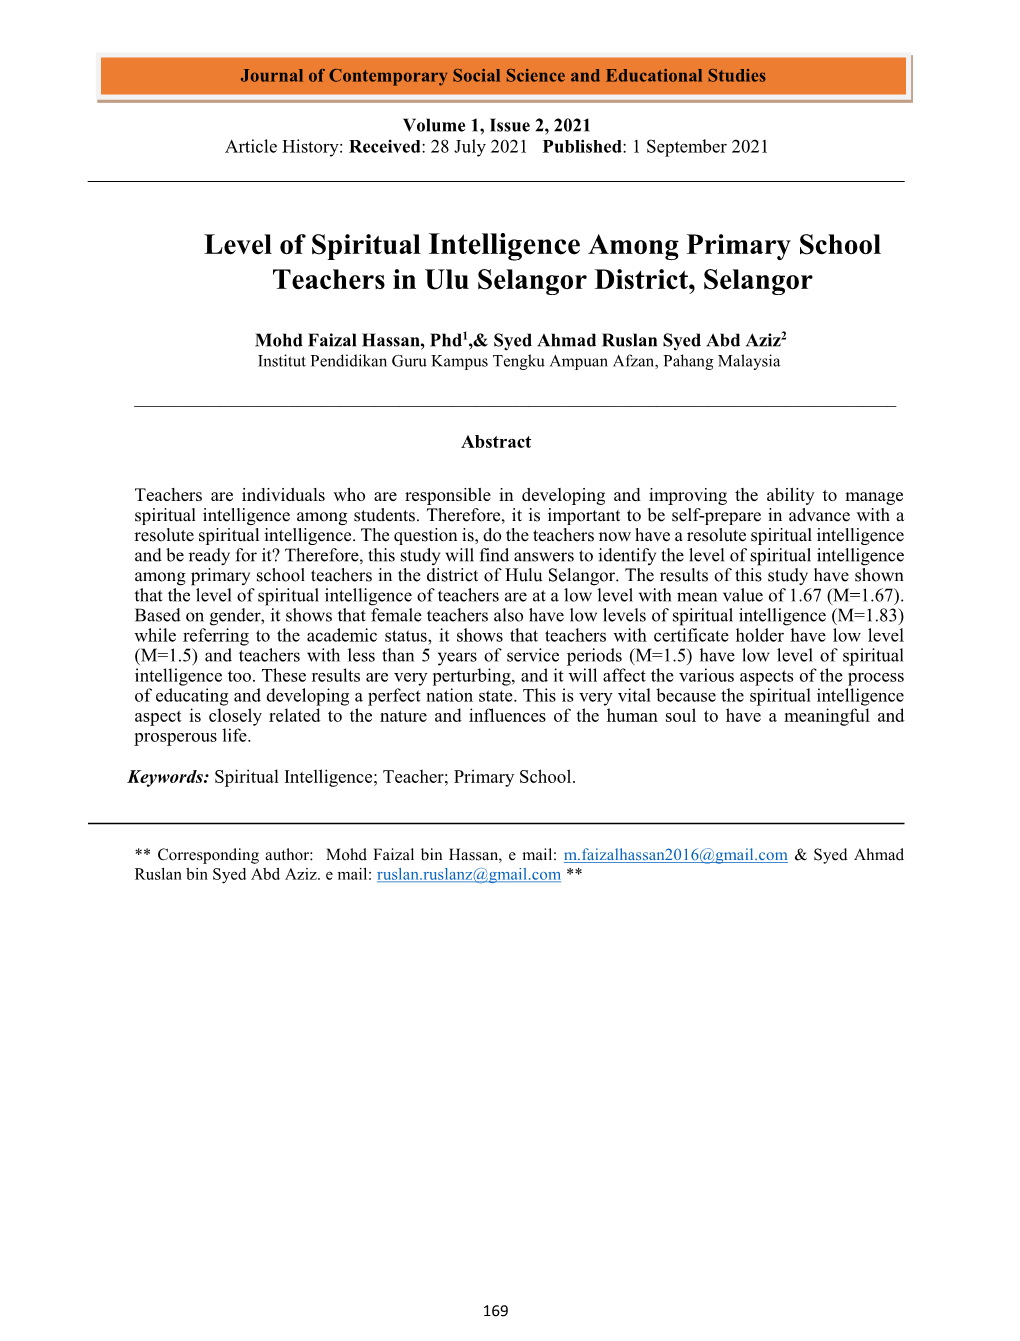 Level of Spiritual Intelligence Among Primary School Teachers in Ulu Selangor District, Selangor